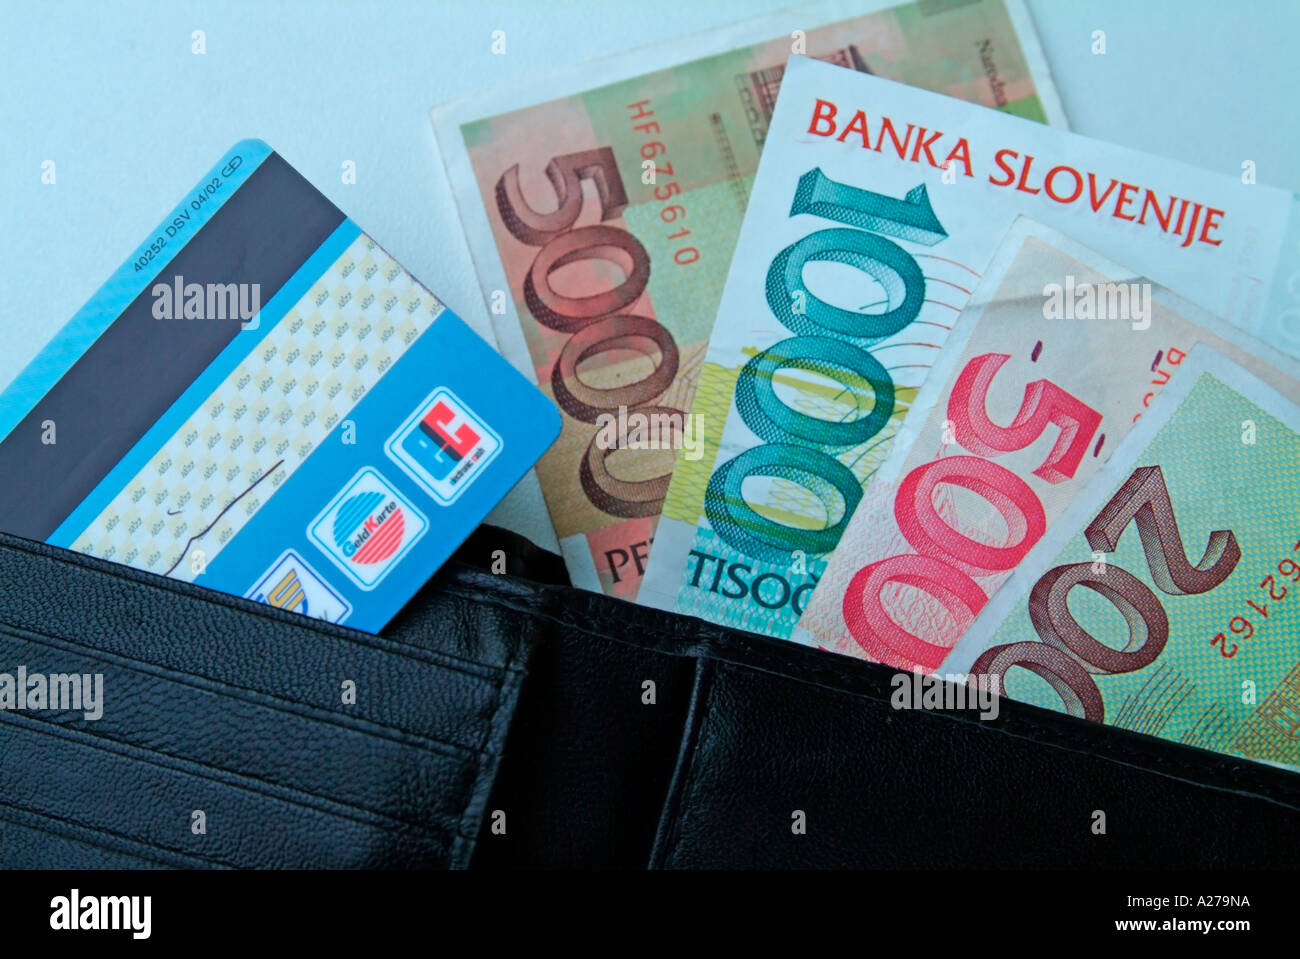 EC card bank card and banknotes bank notes slovenian Tollars in a wallet purse Stock Photo